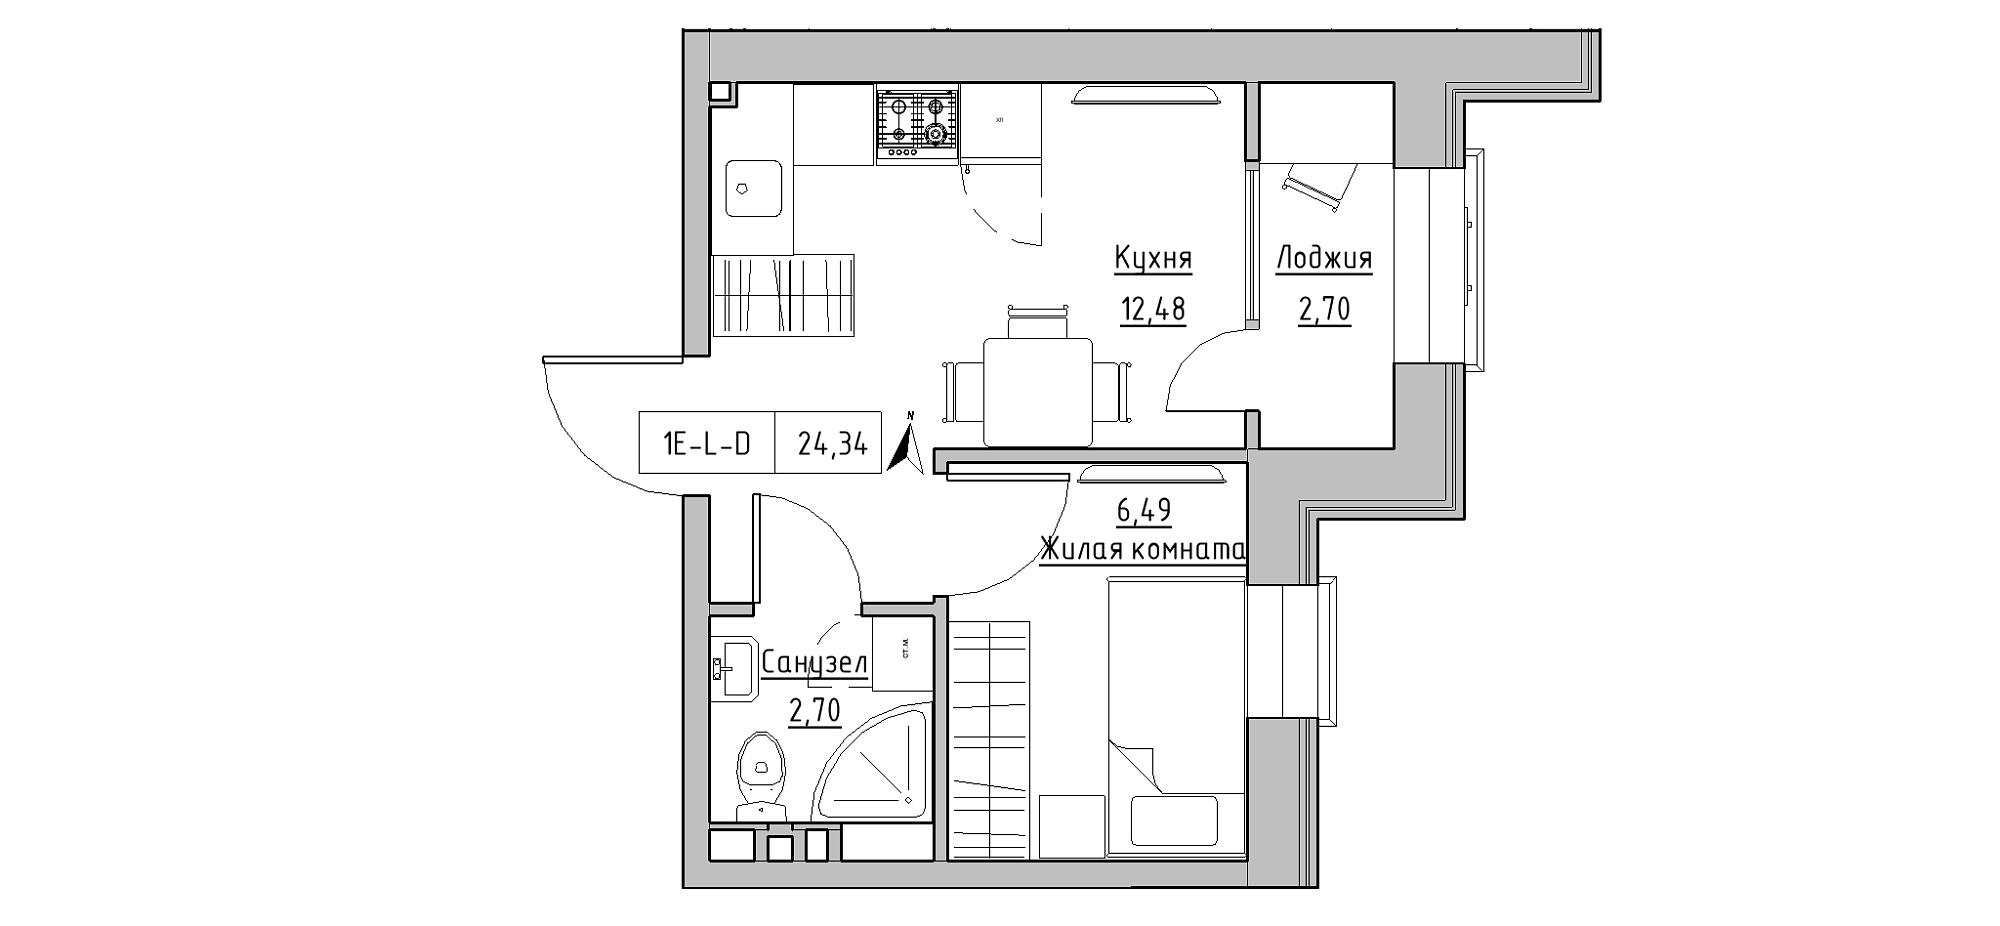 Planning 1-rm flats area 24.34m2, KS-020-04/0015.